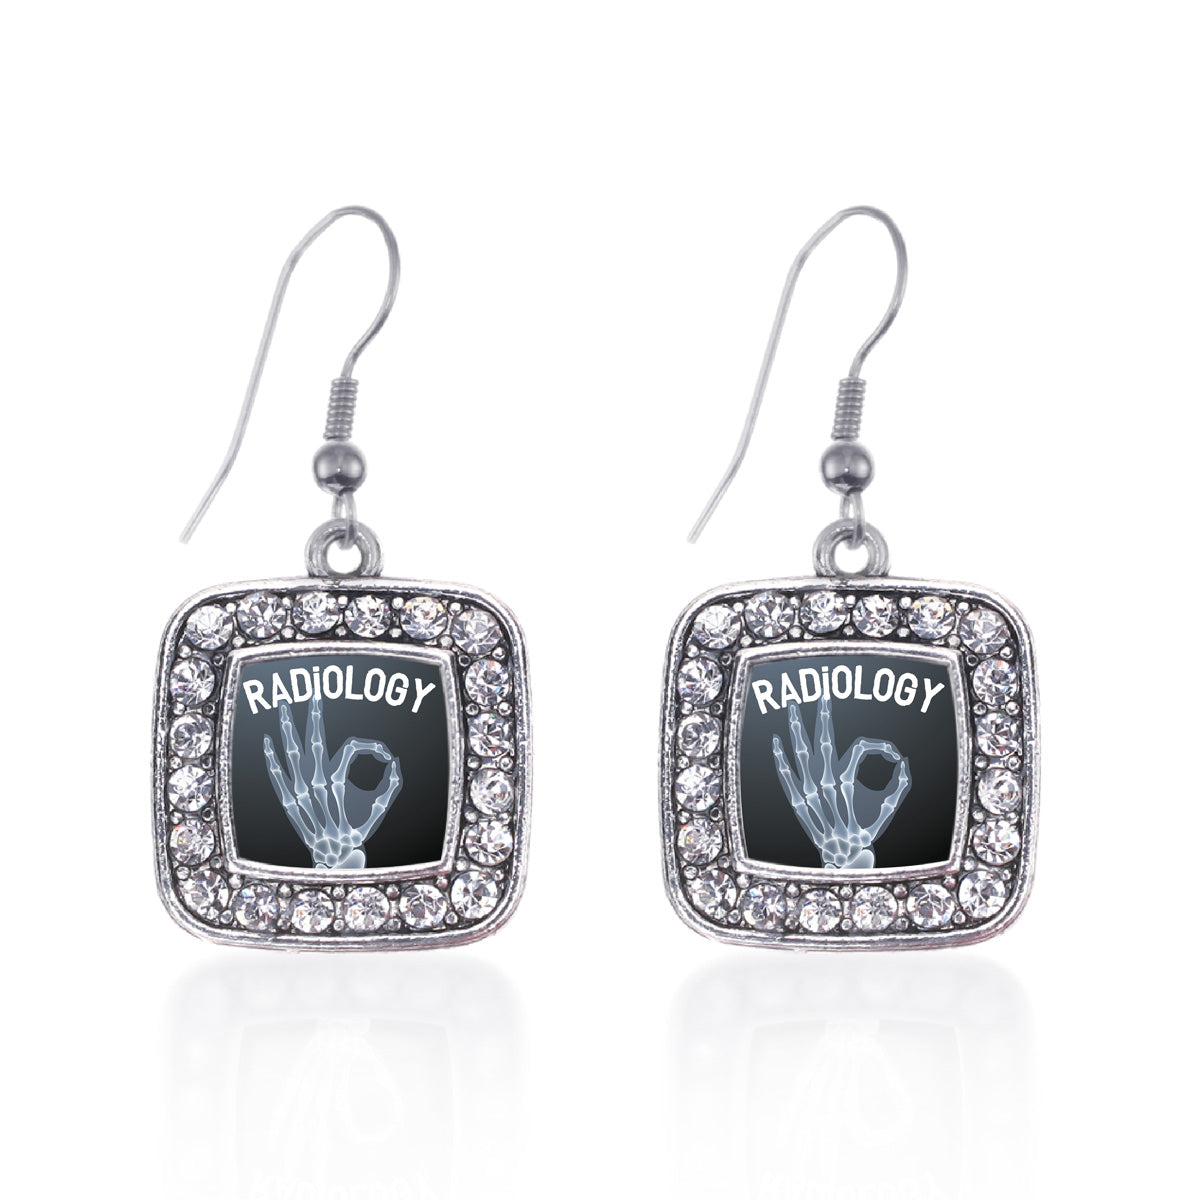 Silver Radiology Square Charm Dangle Earrings